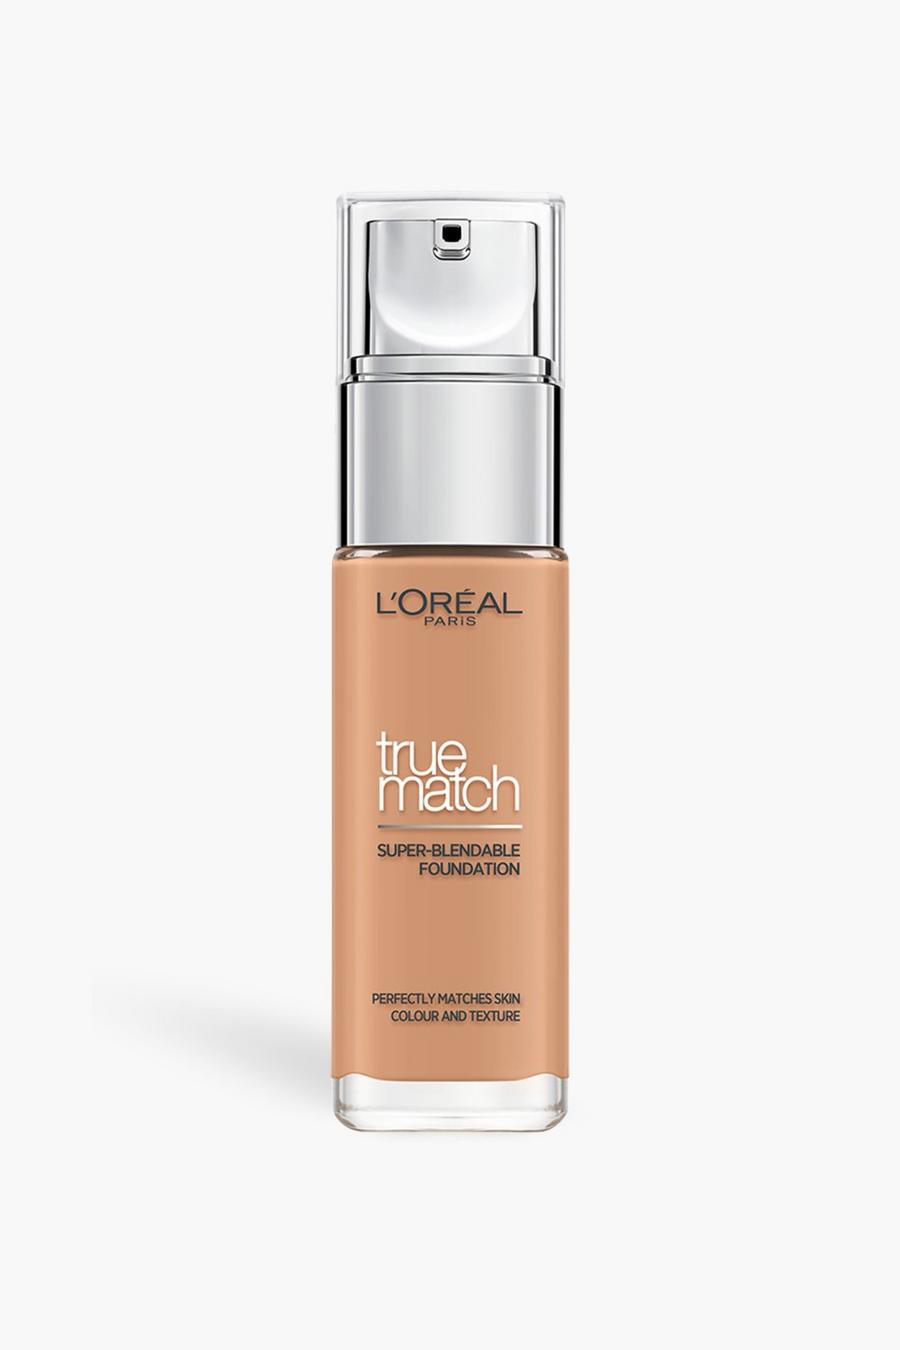 L'Oréal Paris True Match Liquid Foundation 4.5N True Beige, SPF 17, 30ml